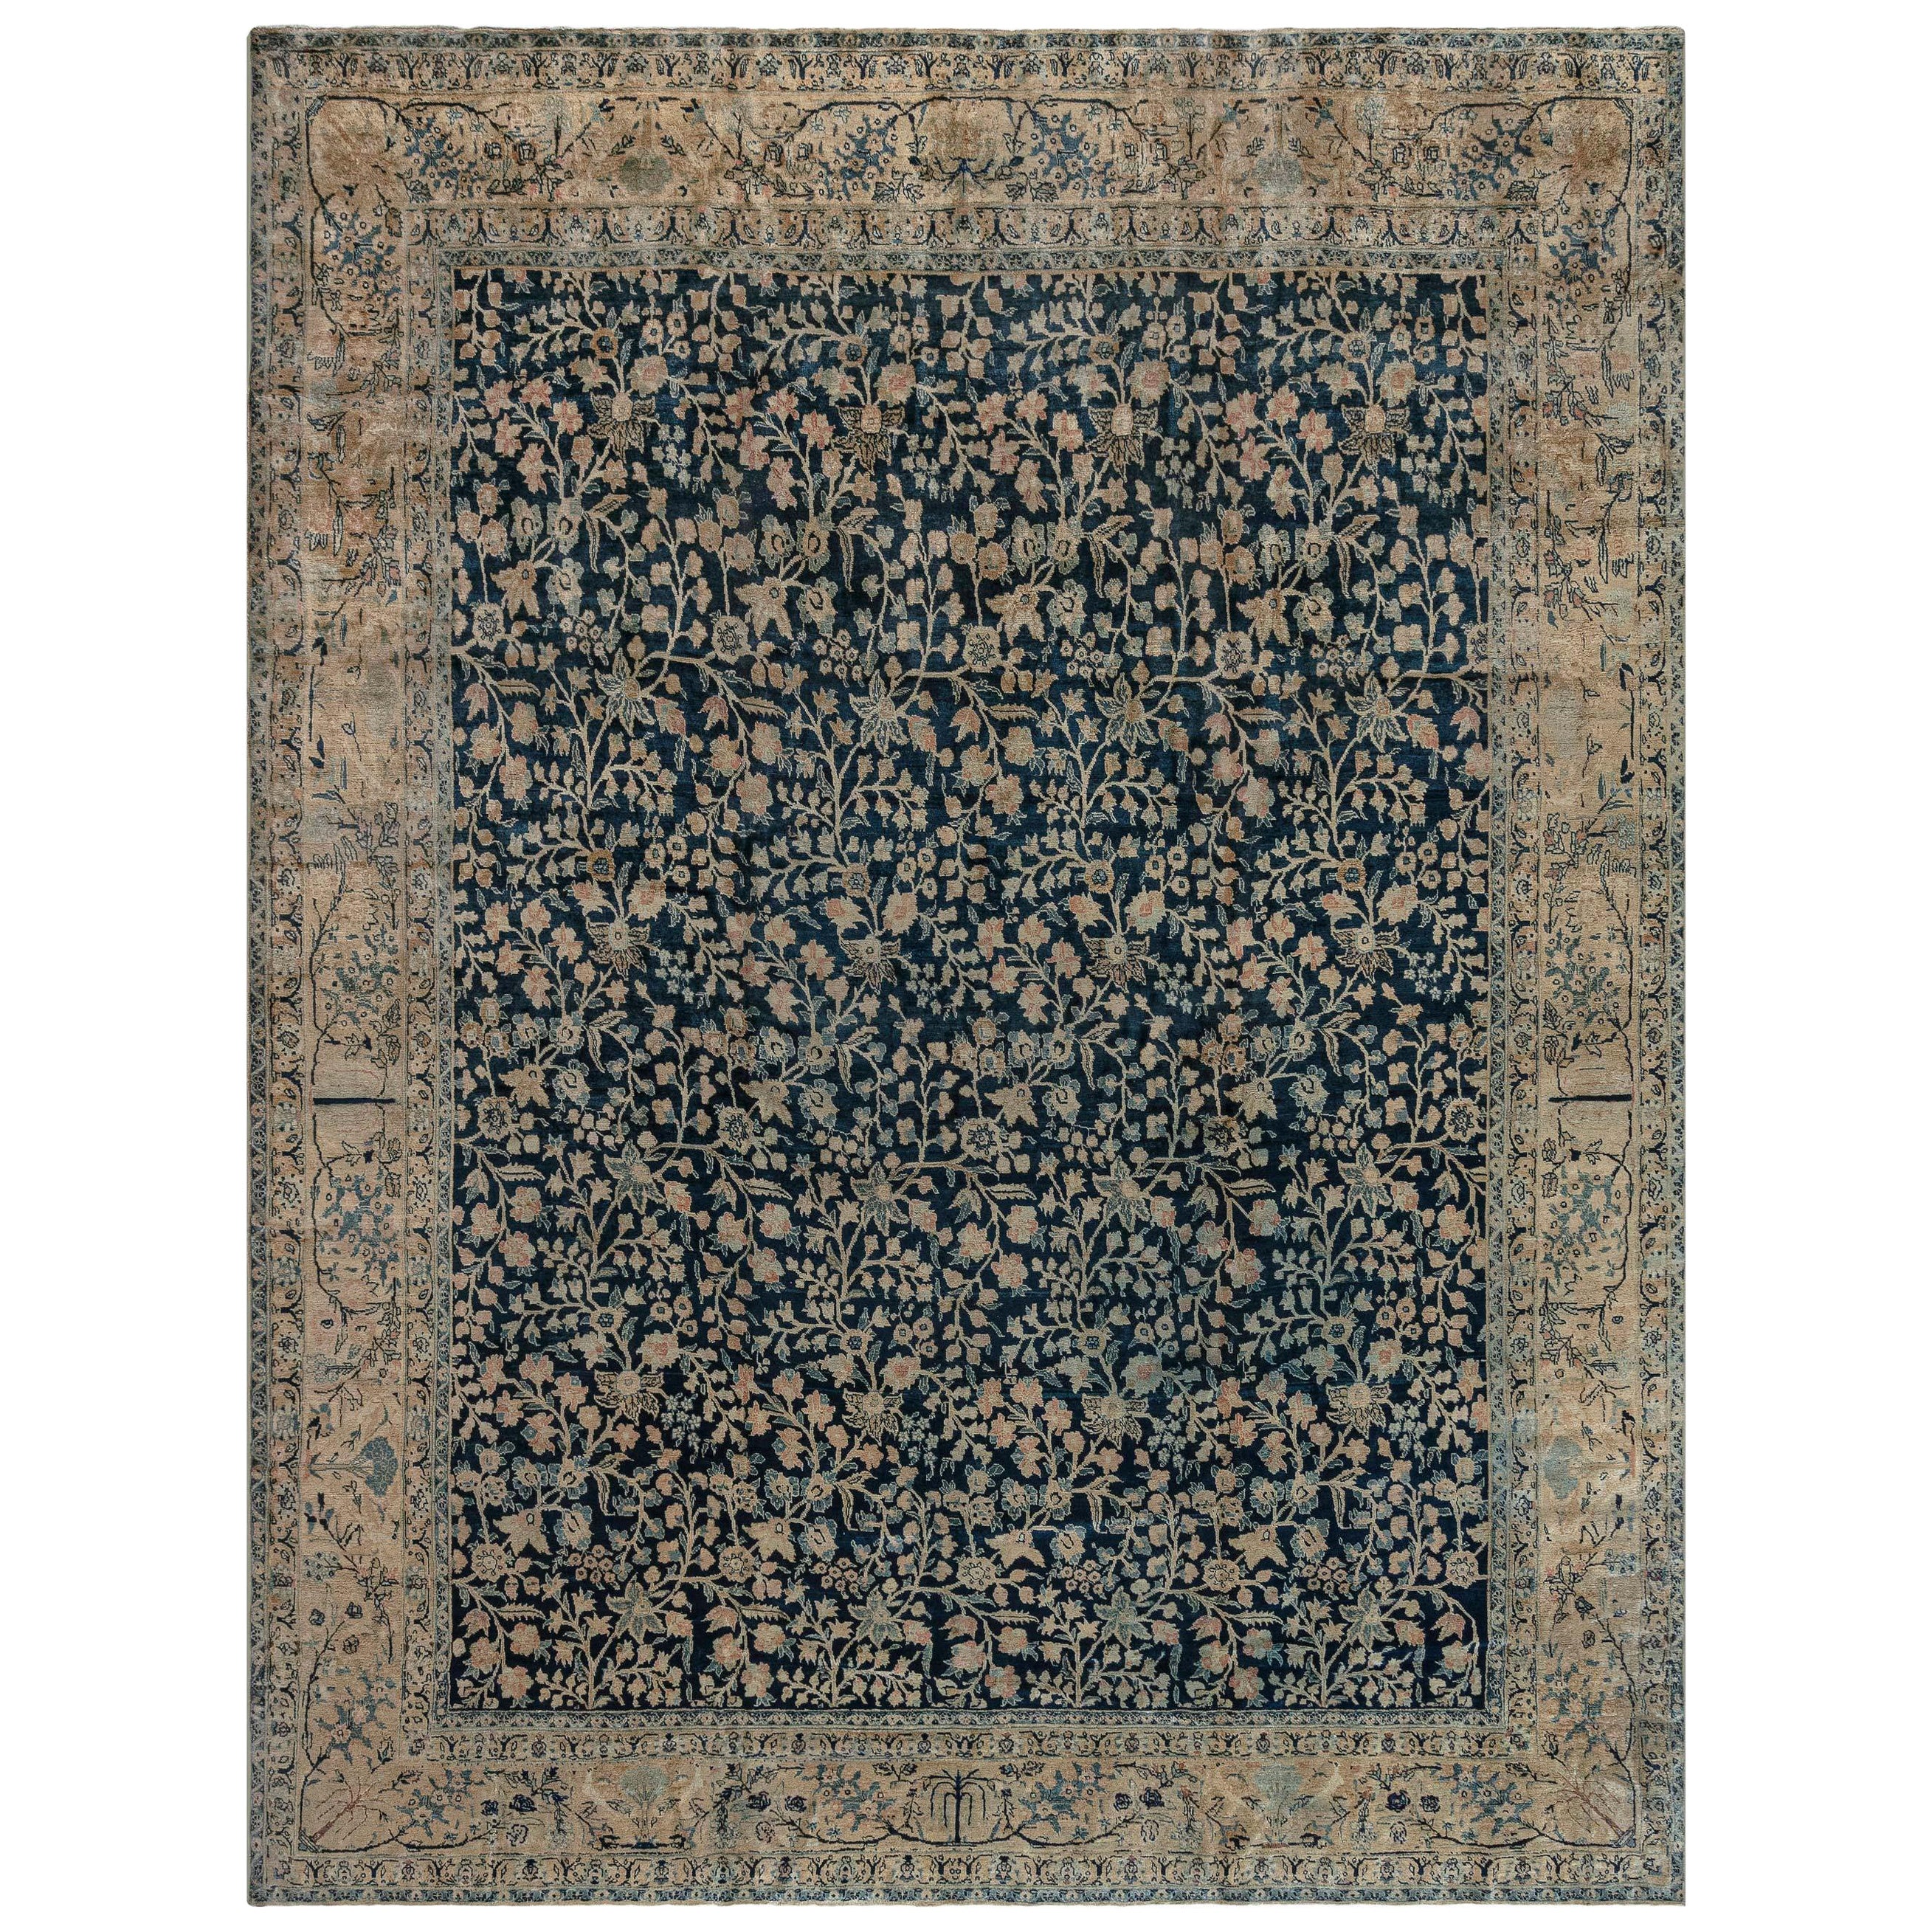 Authentic Persian Tabriz Handmade Wool Carpet For Sale